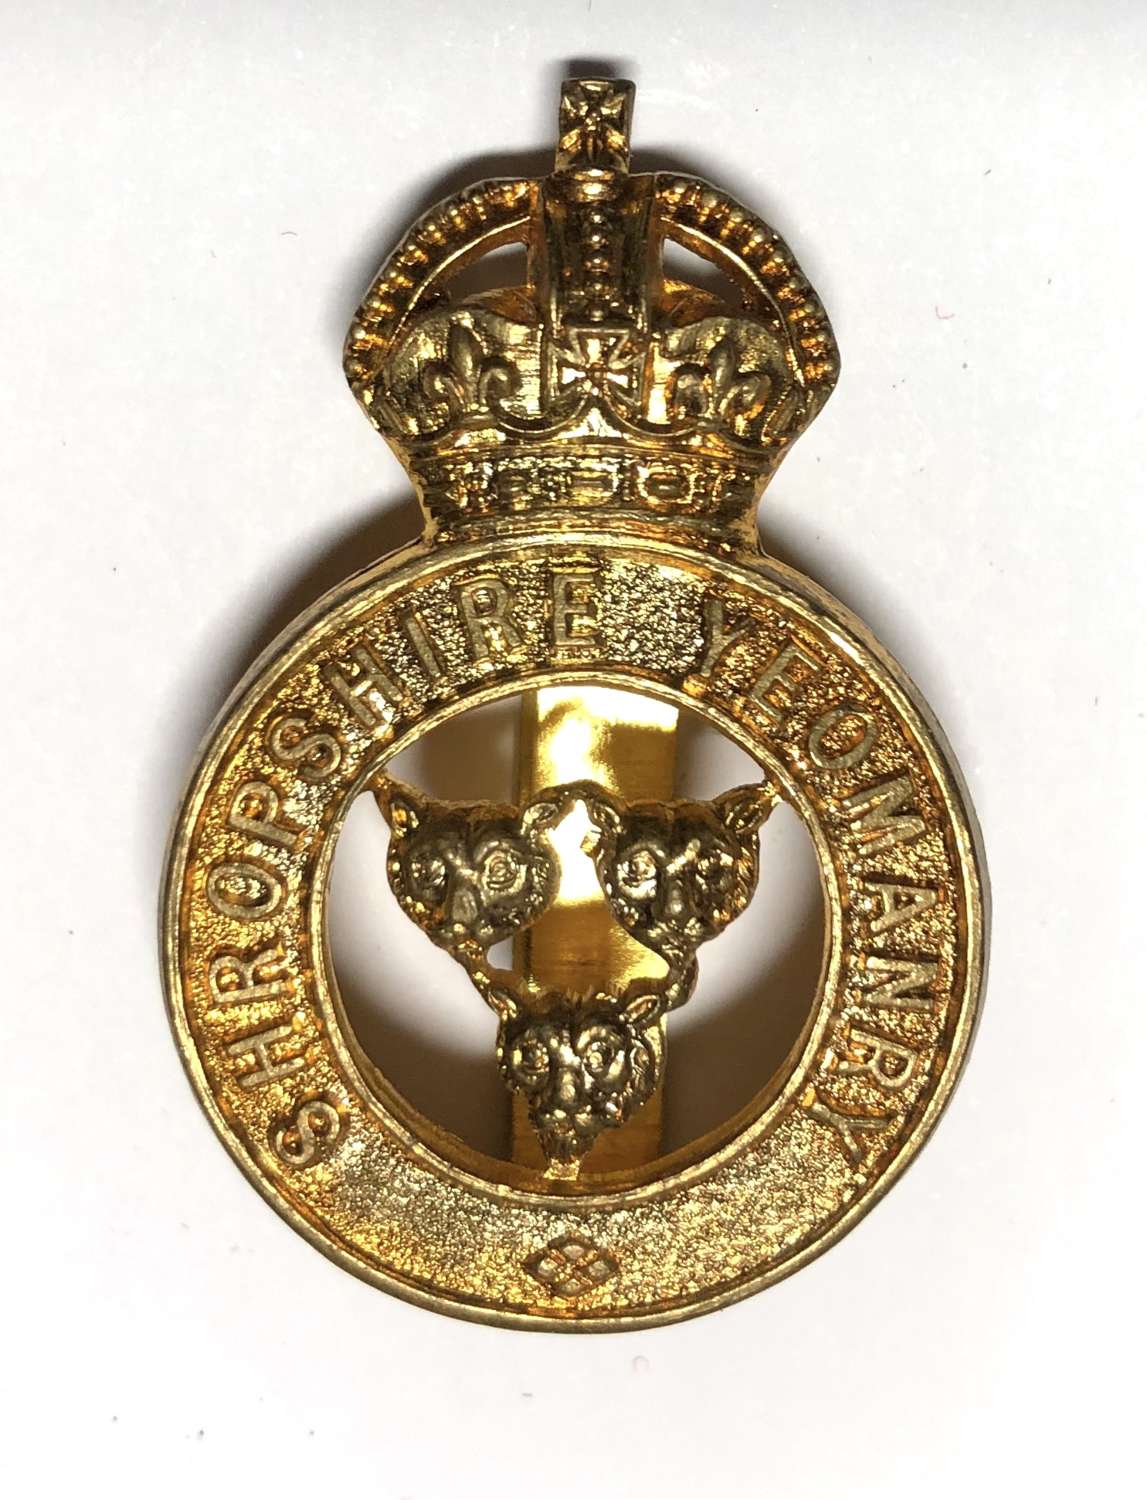 Shropshire Yeomanry cap badge by JR Gaunt, London